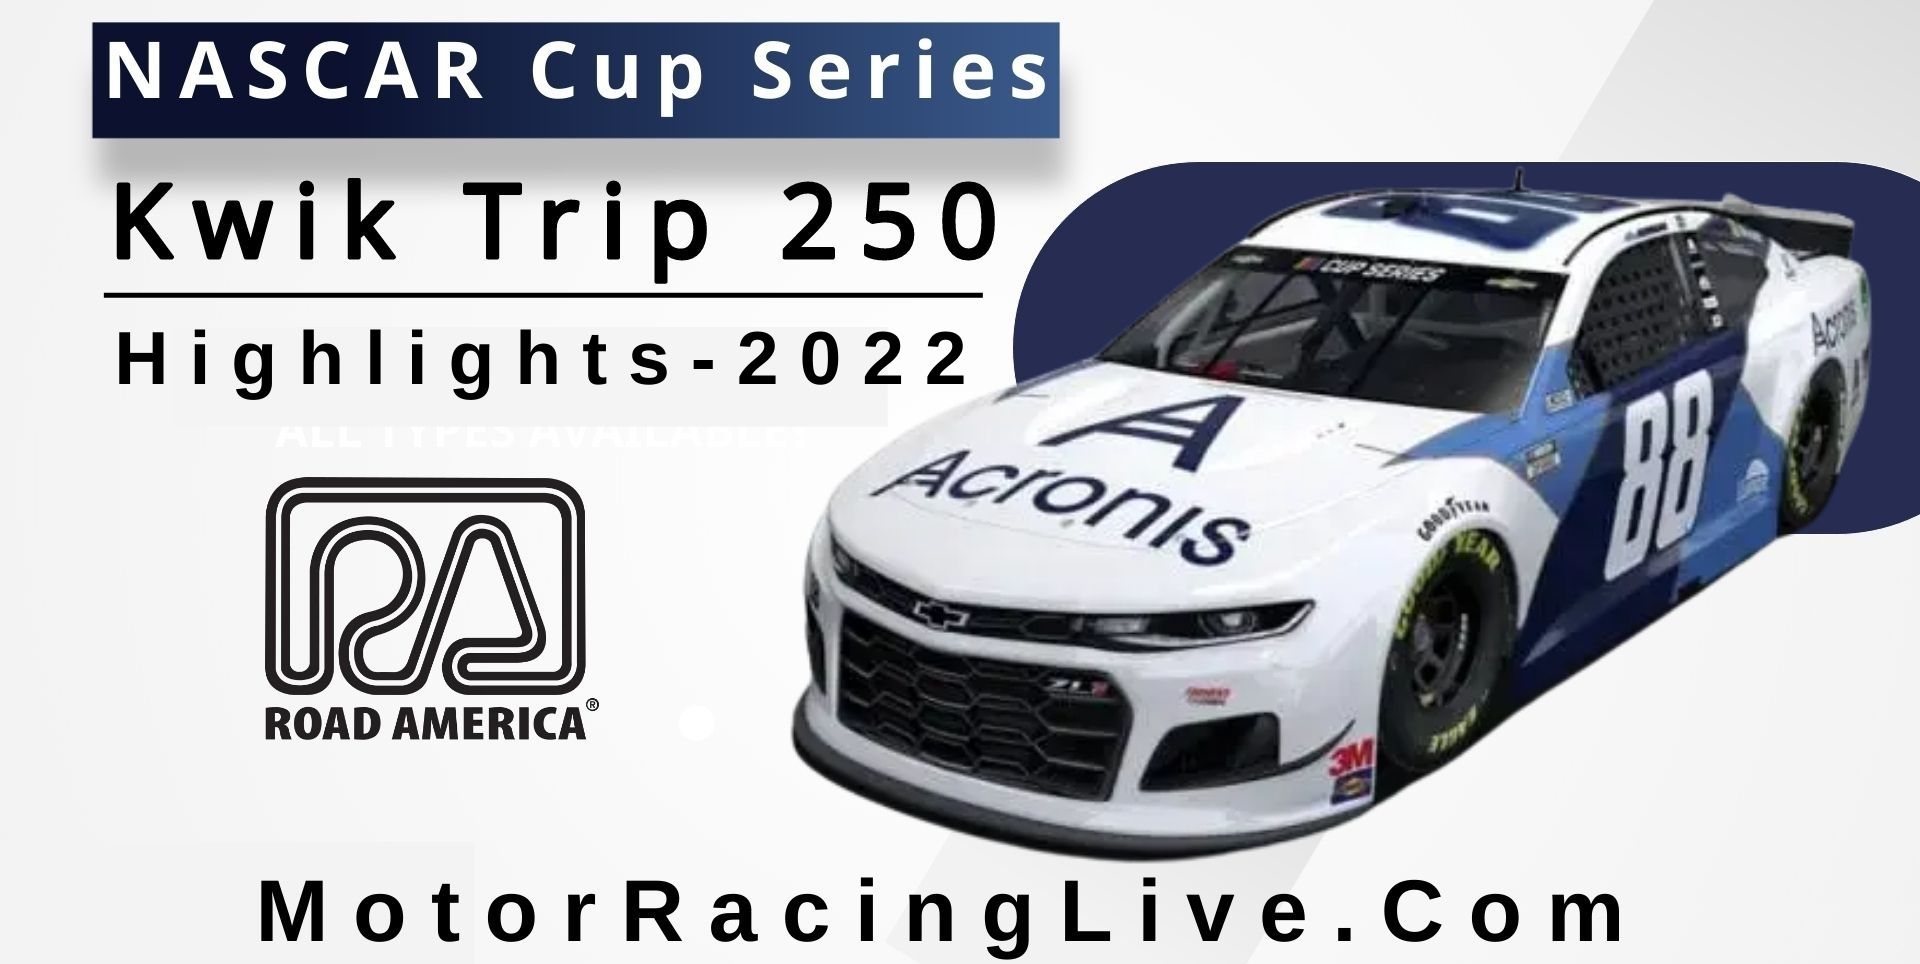 Kwik Trip 250 Highlights 2022 NASCAR Cup